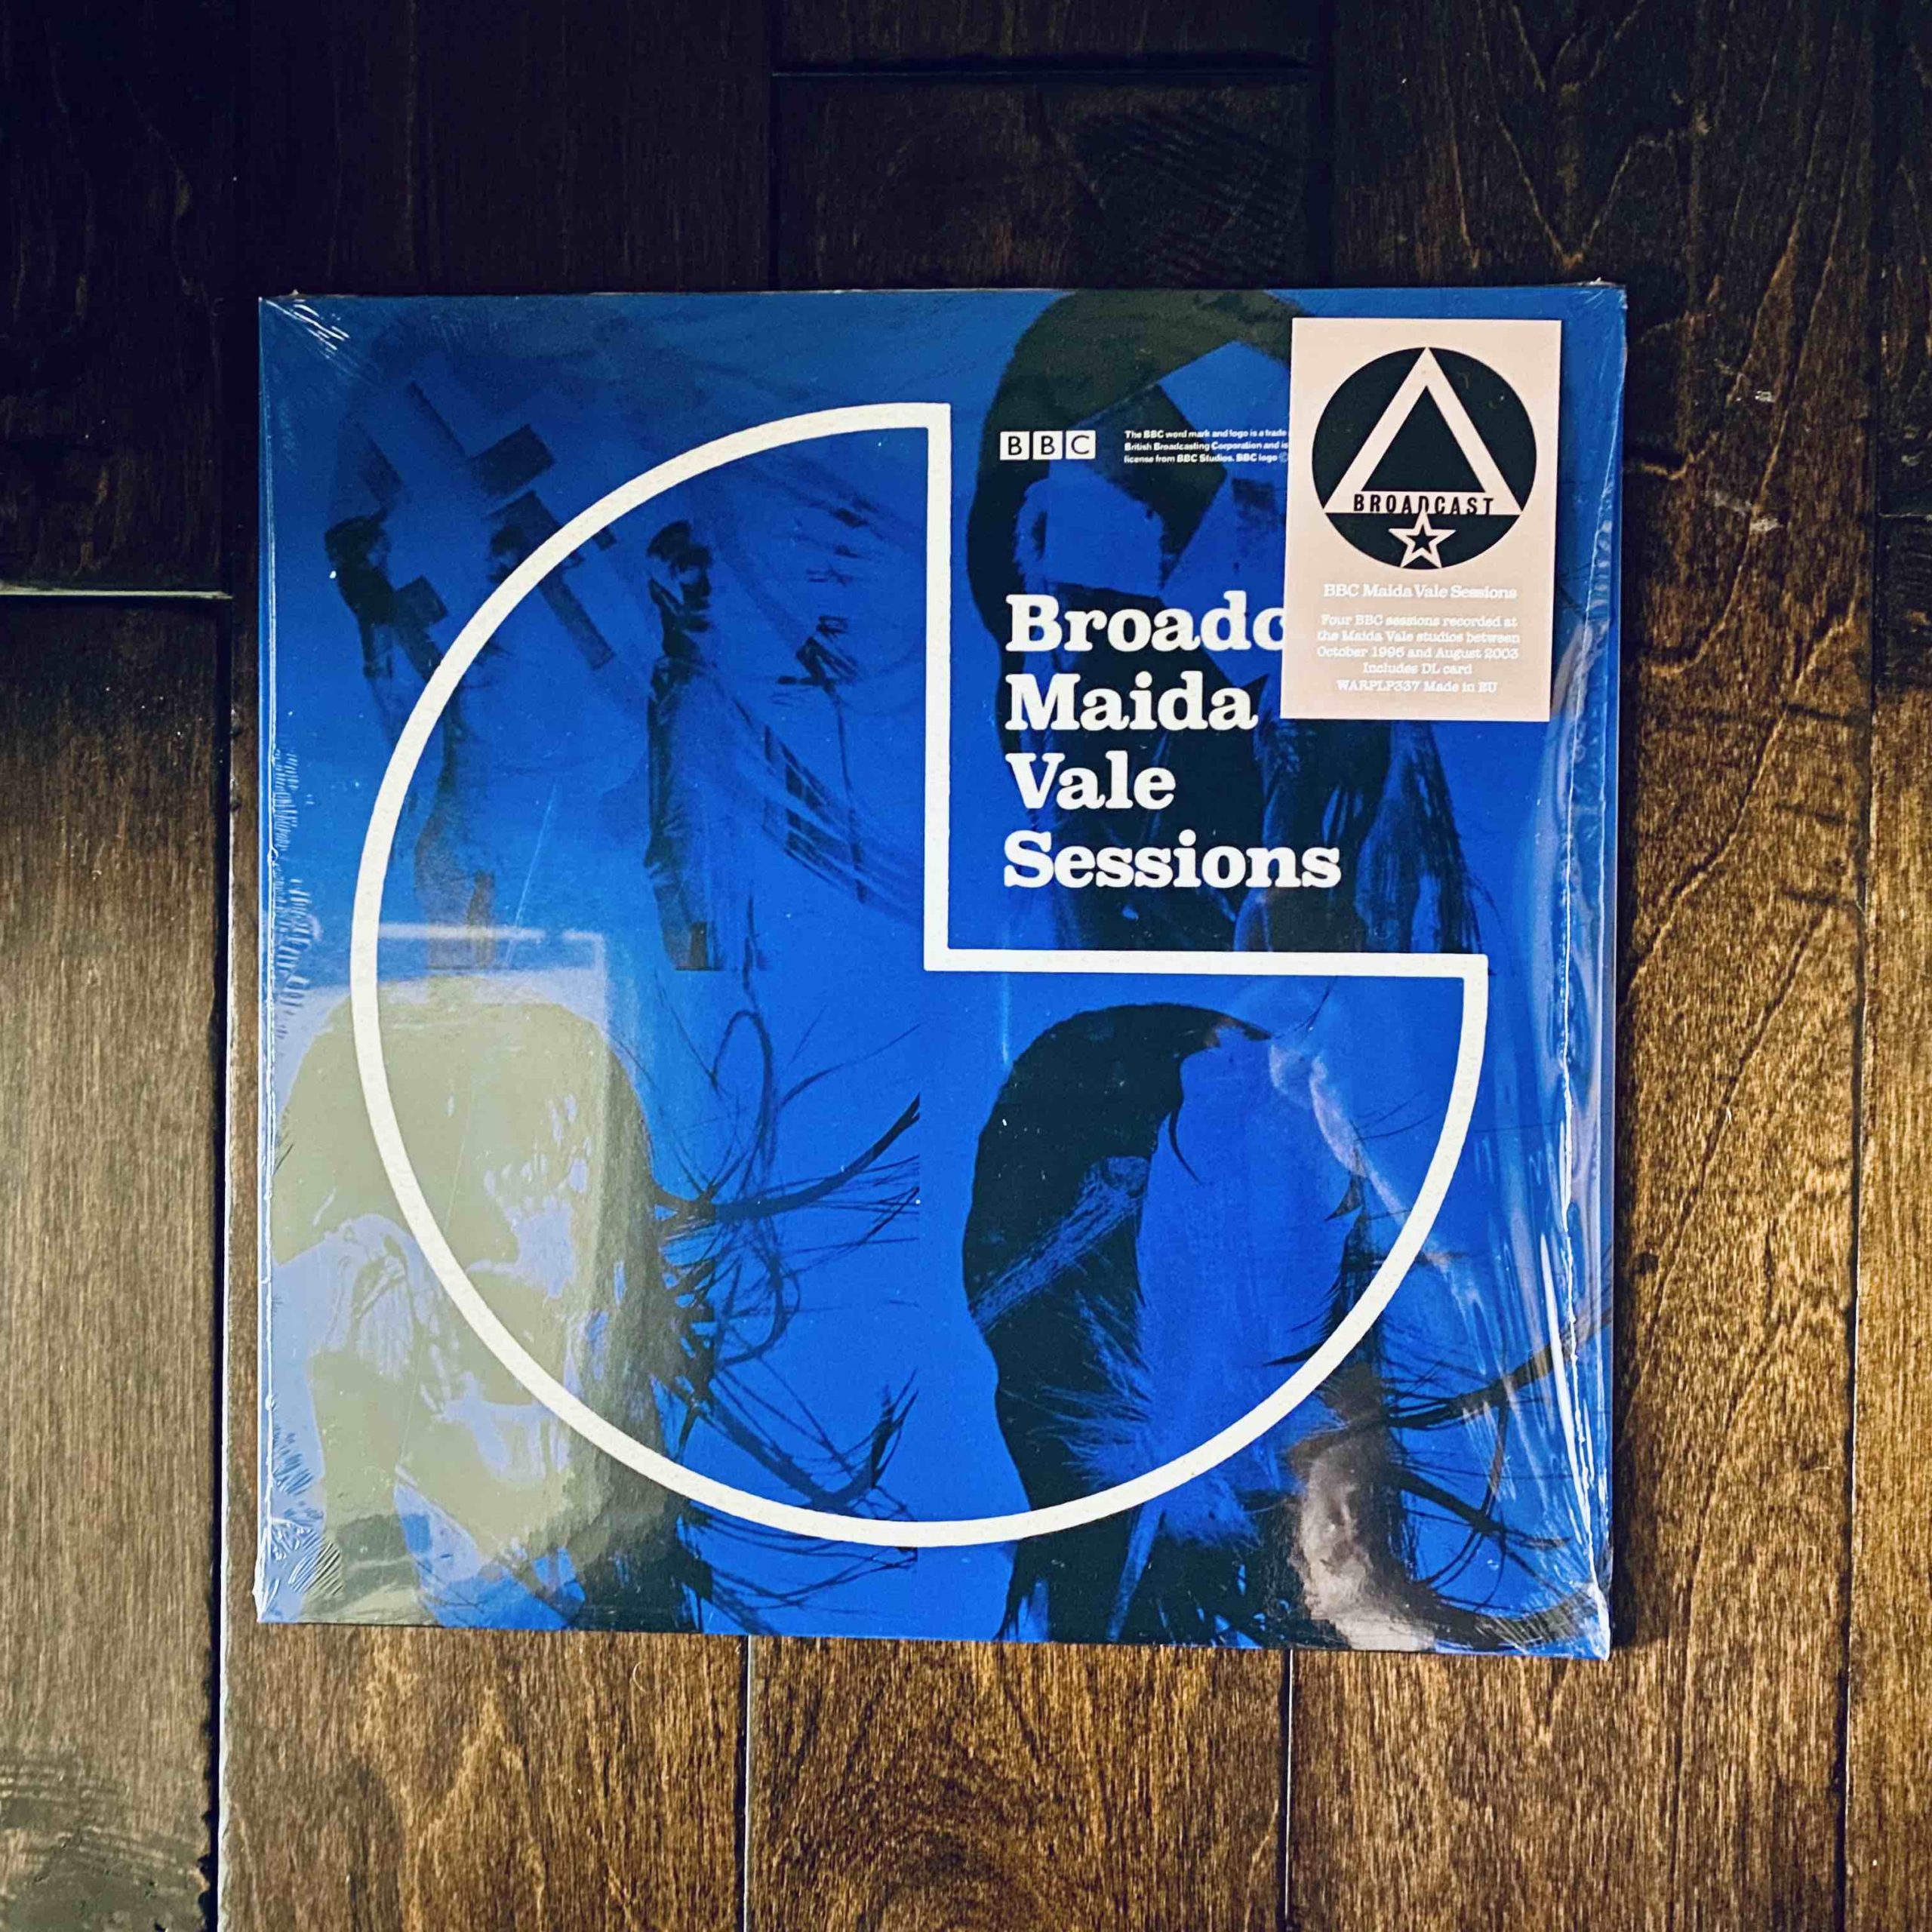 Broadcast Maida Vale Sessions Vinyl Review Fensepost Music And Vinyl Blog